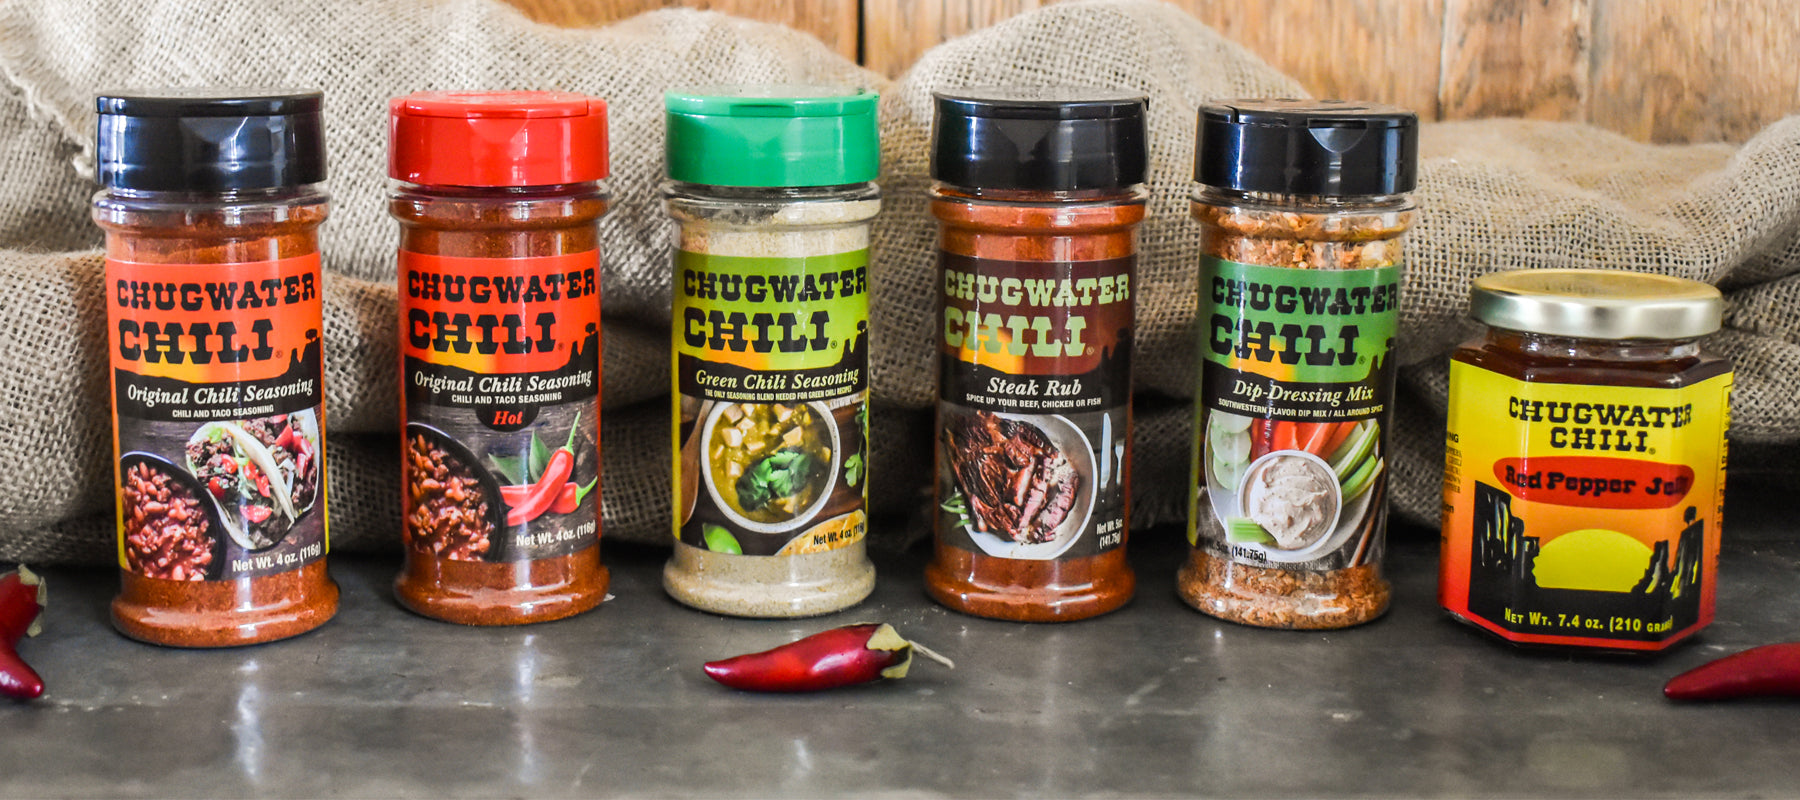 Original Chugwater Chili Products